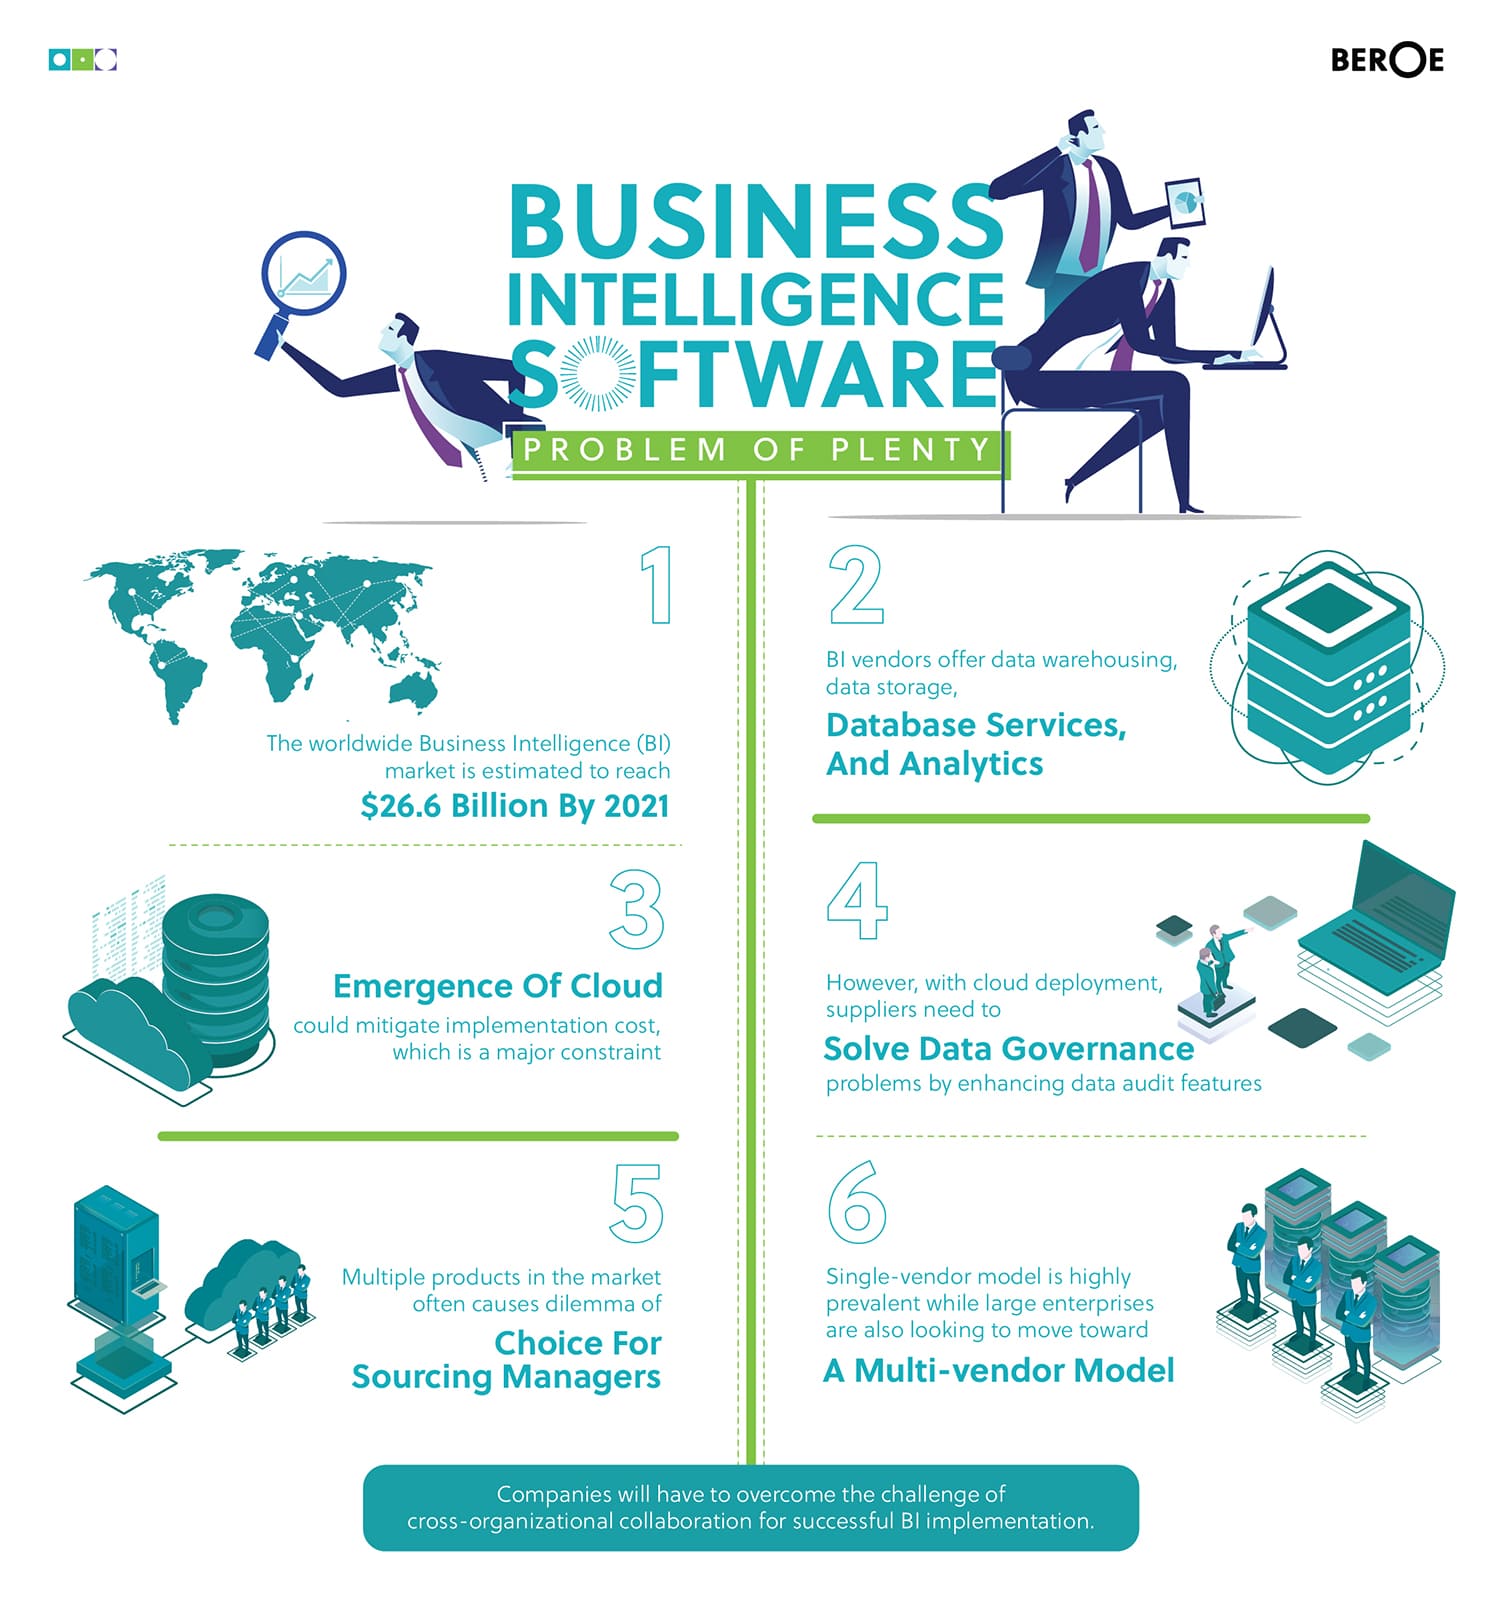 Business Intelligence software